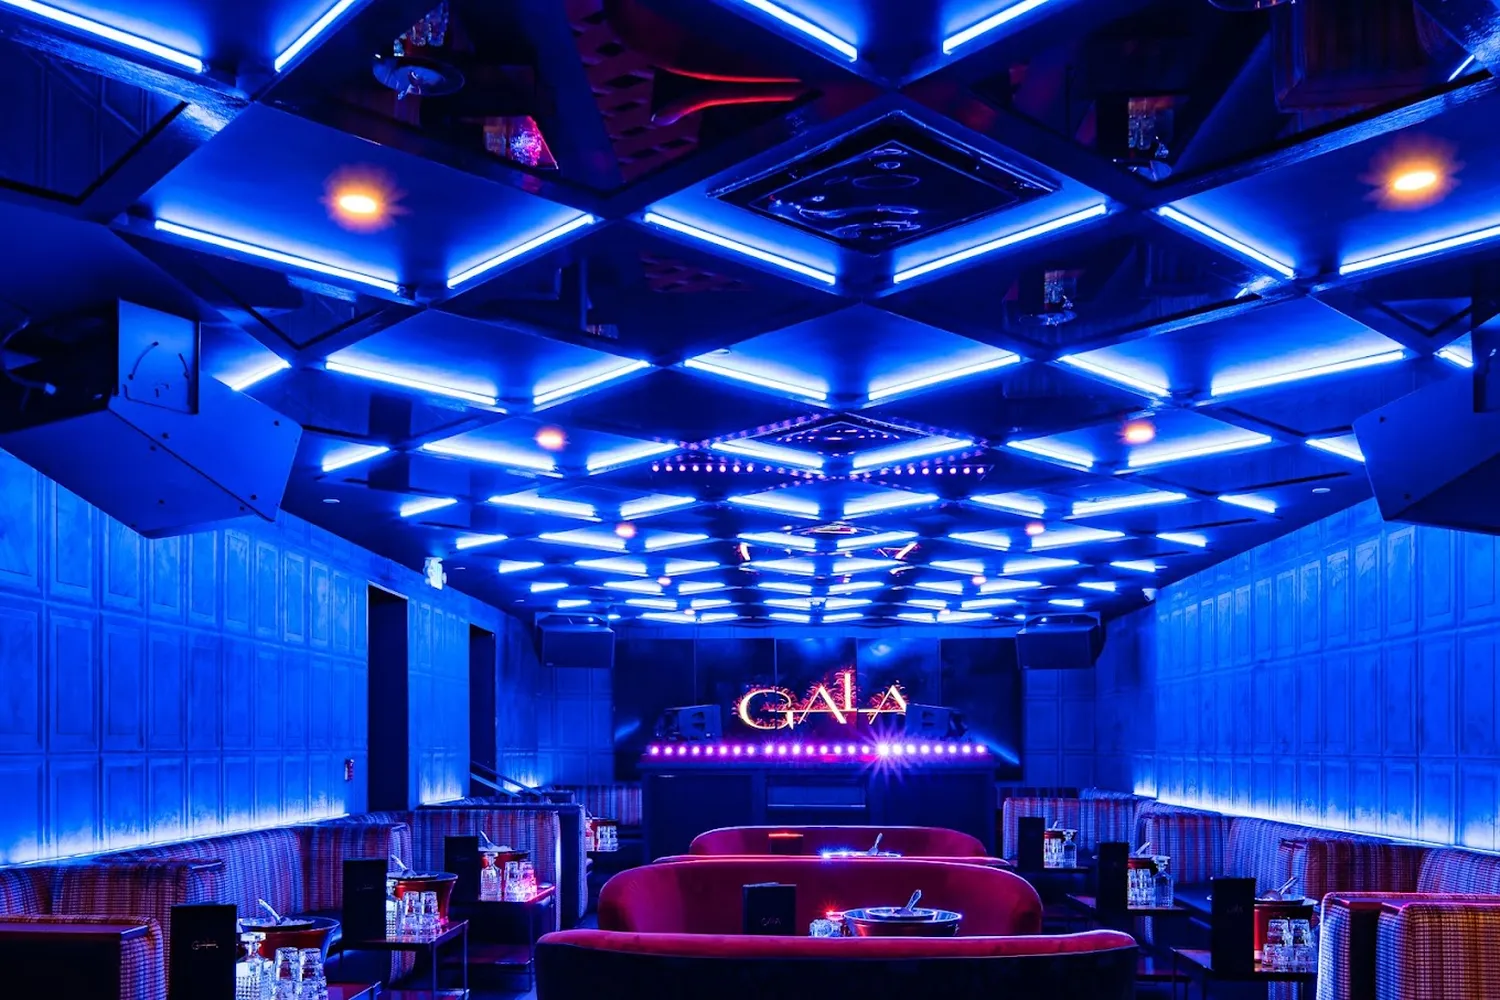 Gala bar lounge Aspen